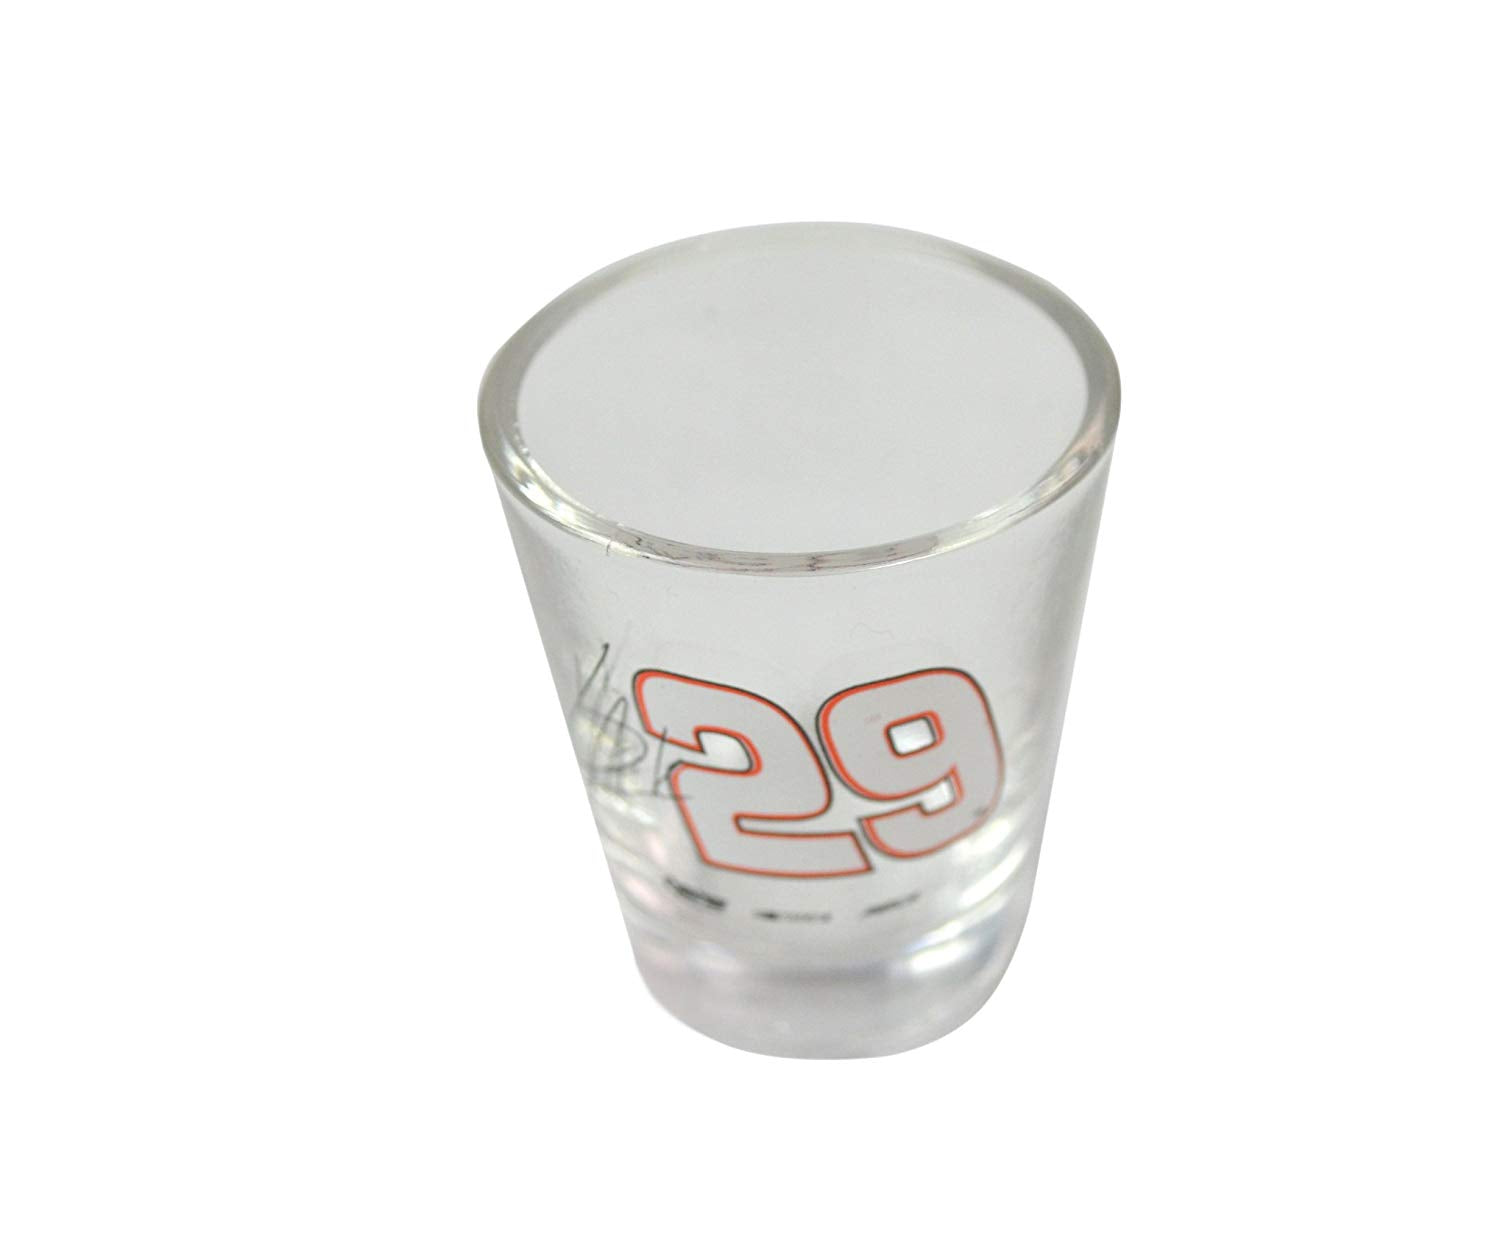 NASCAR Fan Shop 2-Pack 2 oz. Shot Glasses - Great Home Tailgate